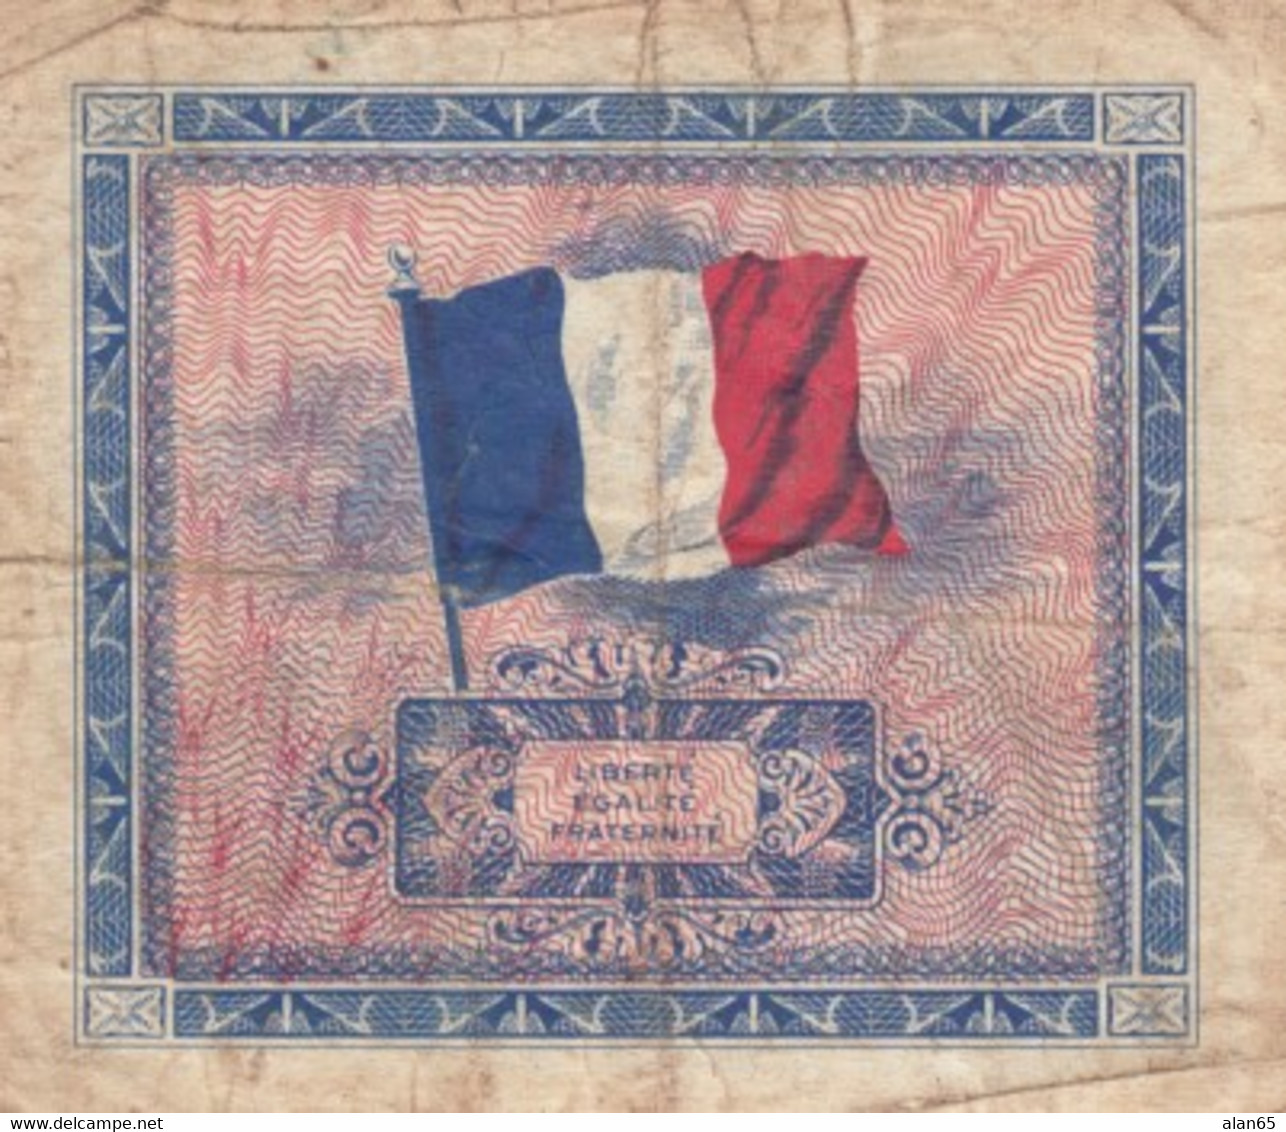 France #114a, 2 Francs 1944 Fine/Very Fine Banknote - 1944 Flag/France